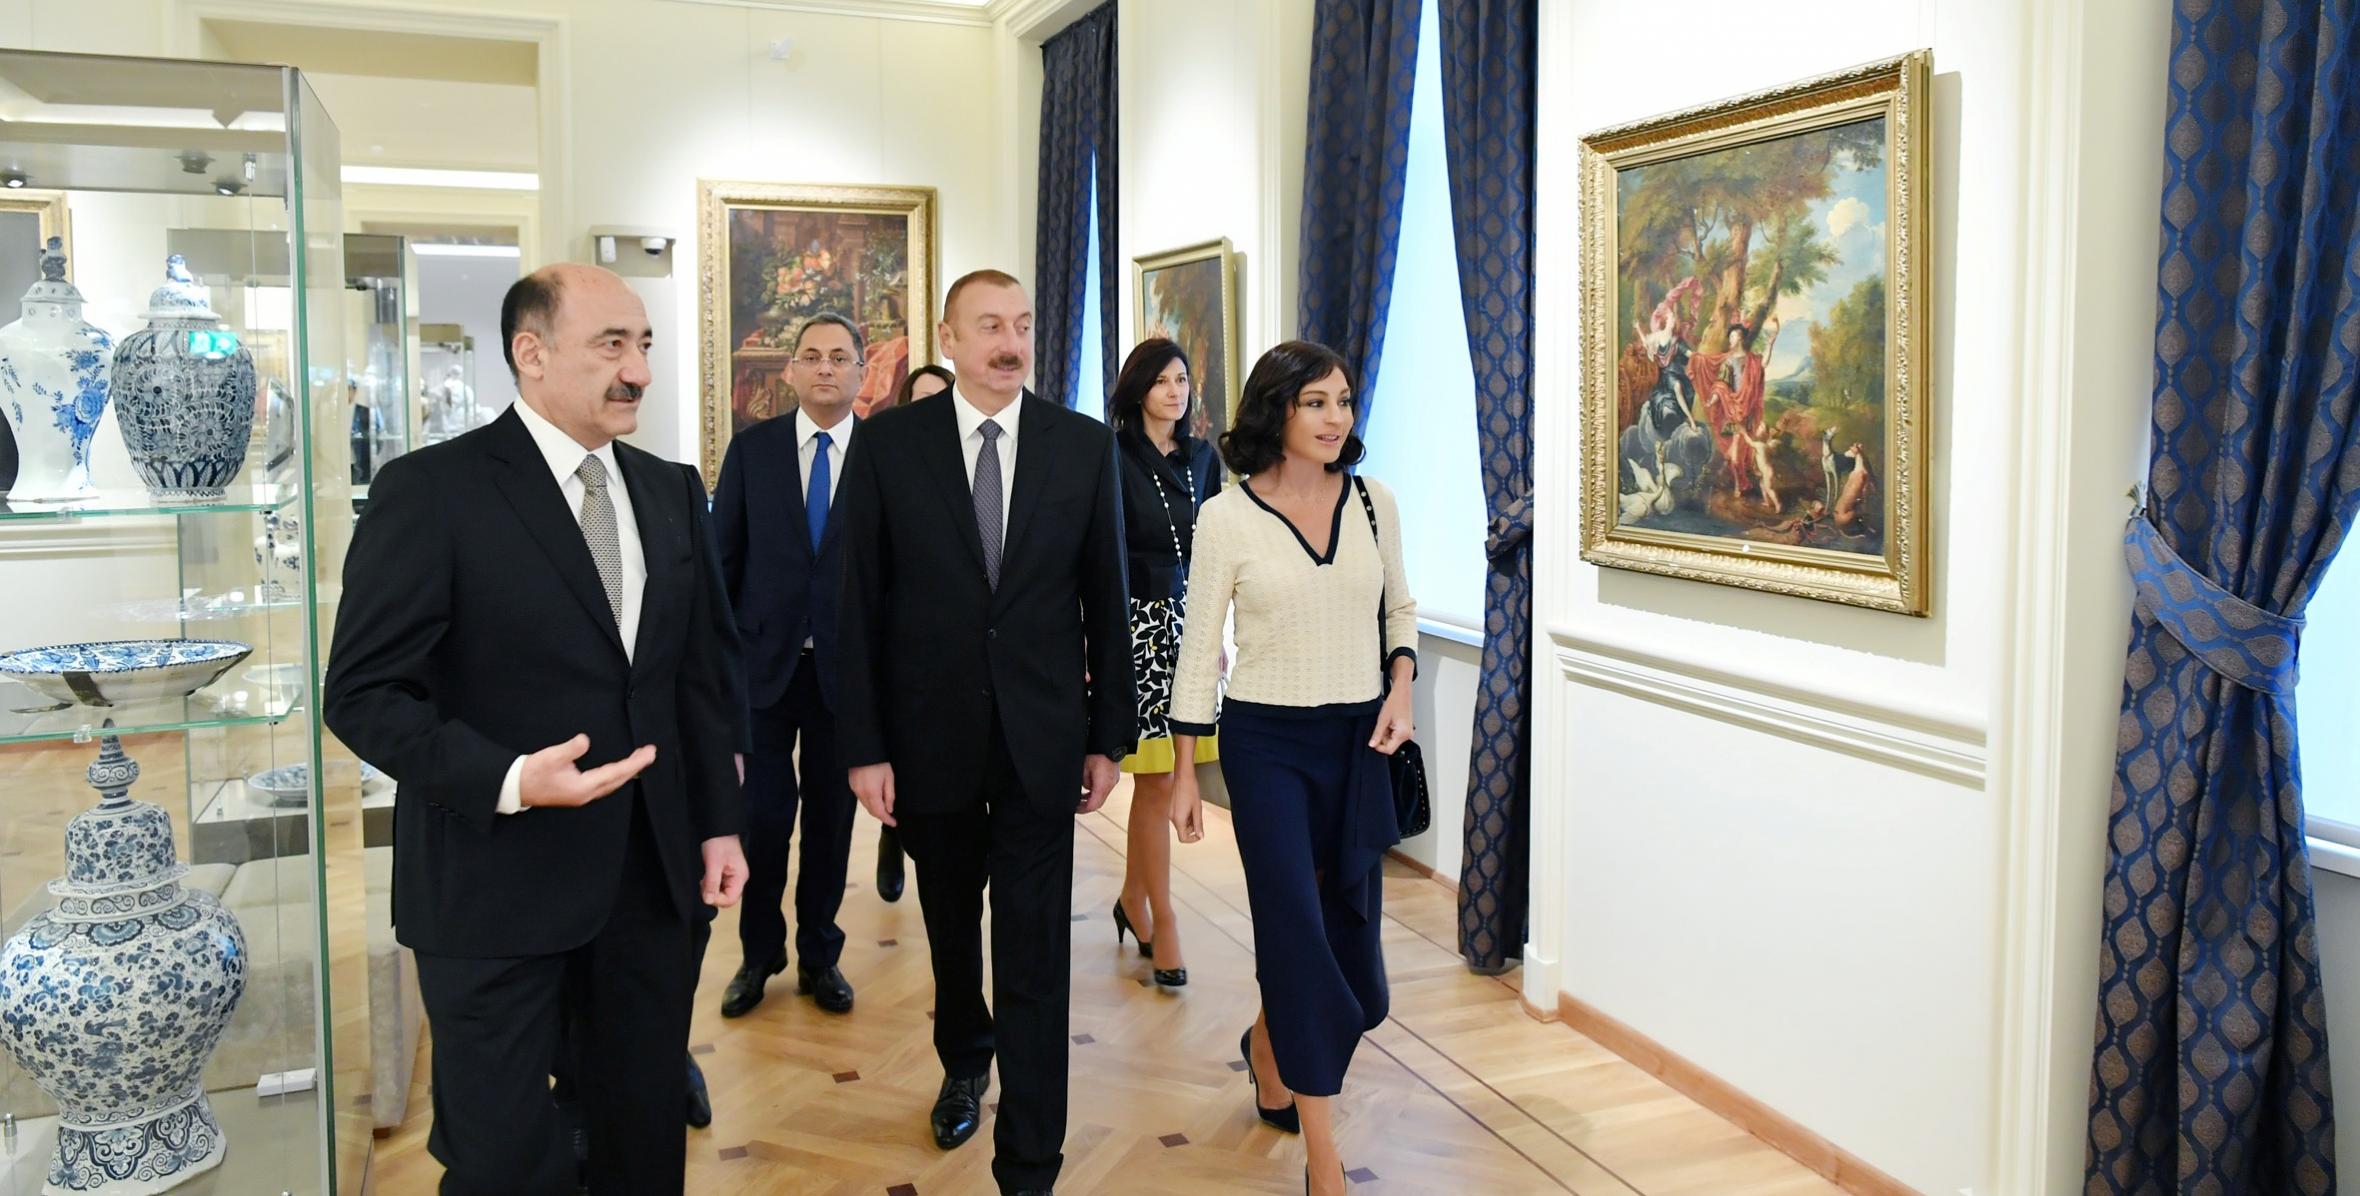 Ilham Aliyev inaugurated third building of Azerbaijan National Museum of Art after major overhaul